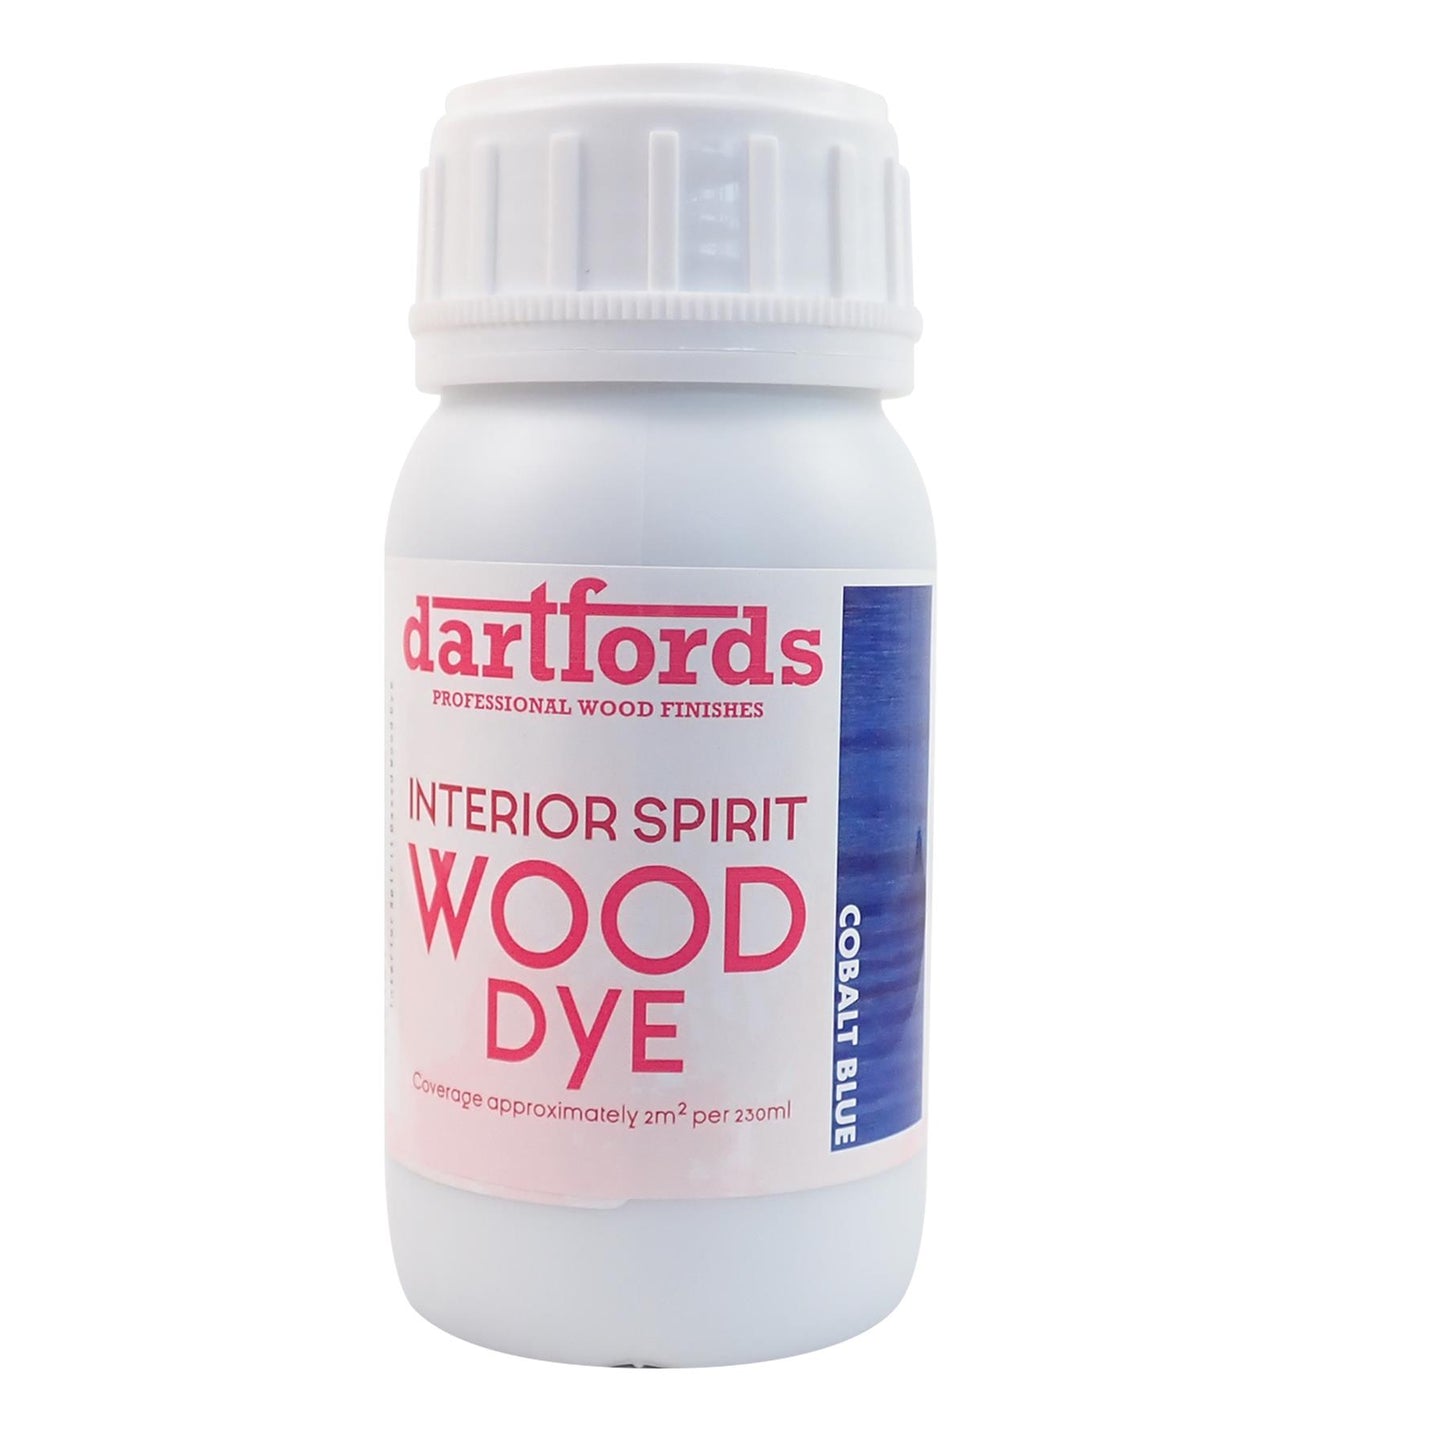 dartfords Cobalt Blue Interior Spirit Based Wood Dye - 230ml Tin